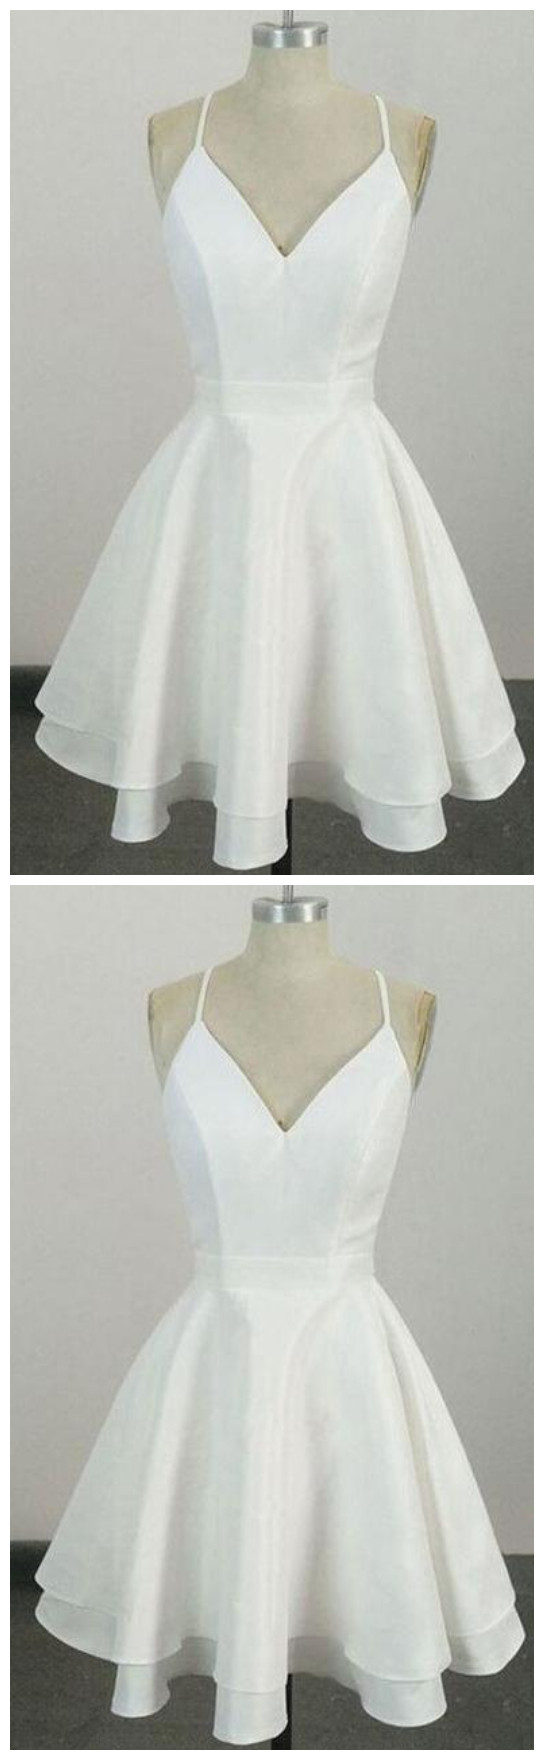 Stylish Dress Simple A Line White Homecoming Dress,cute Short Prom Dress